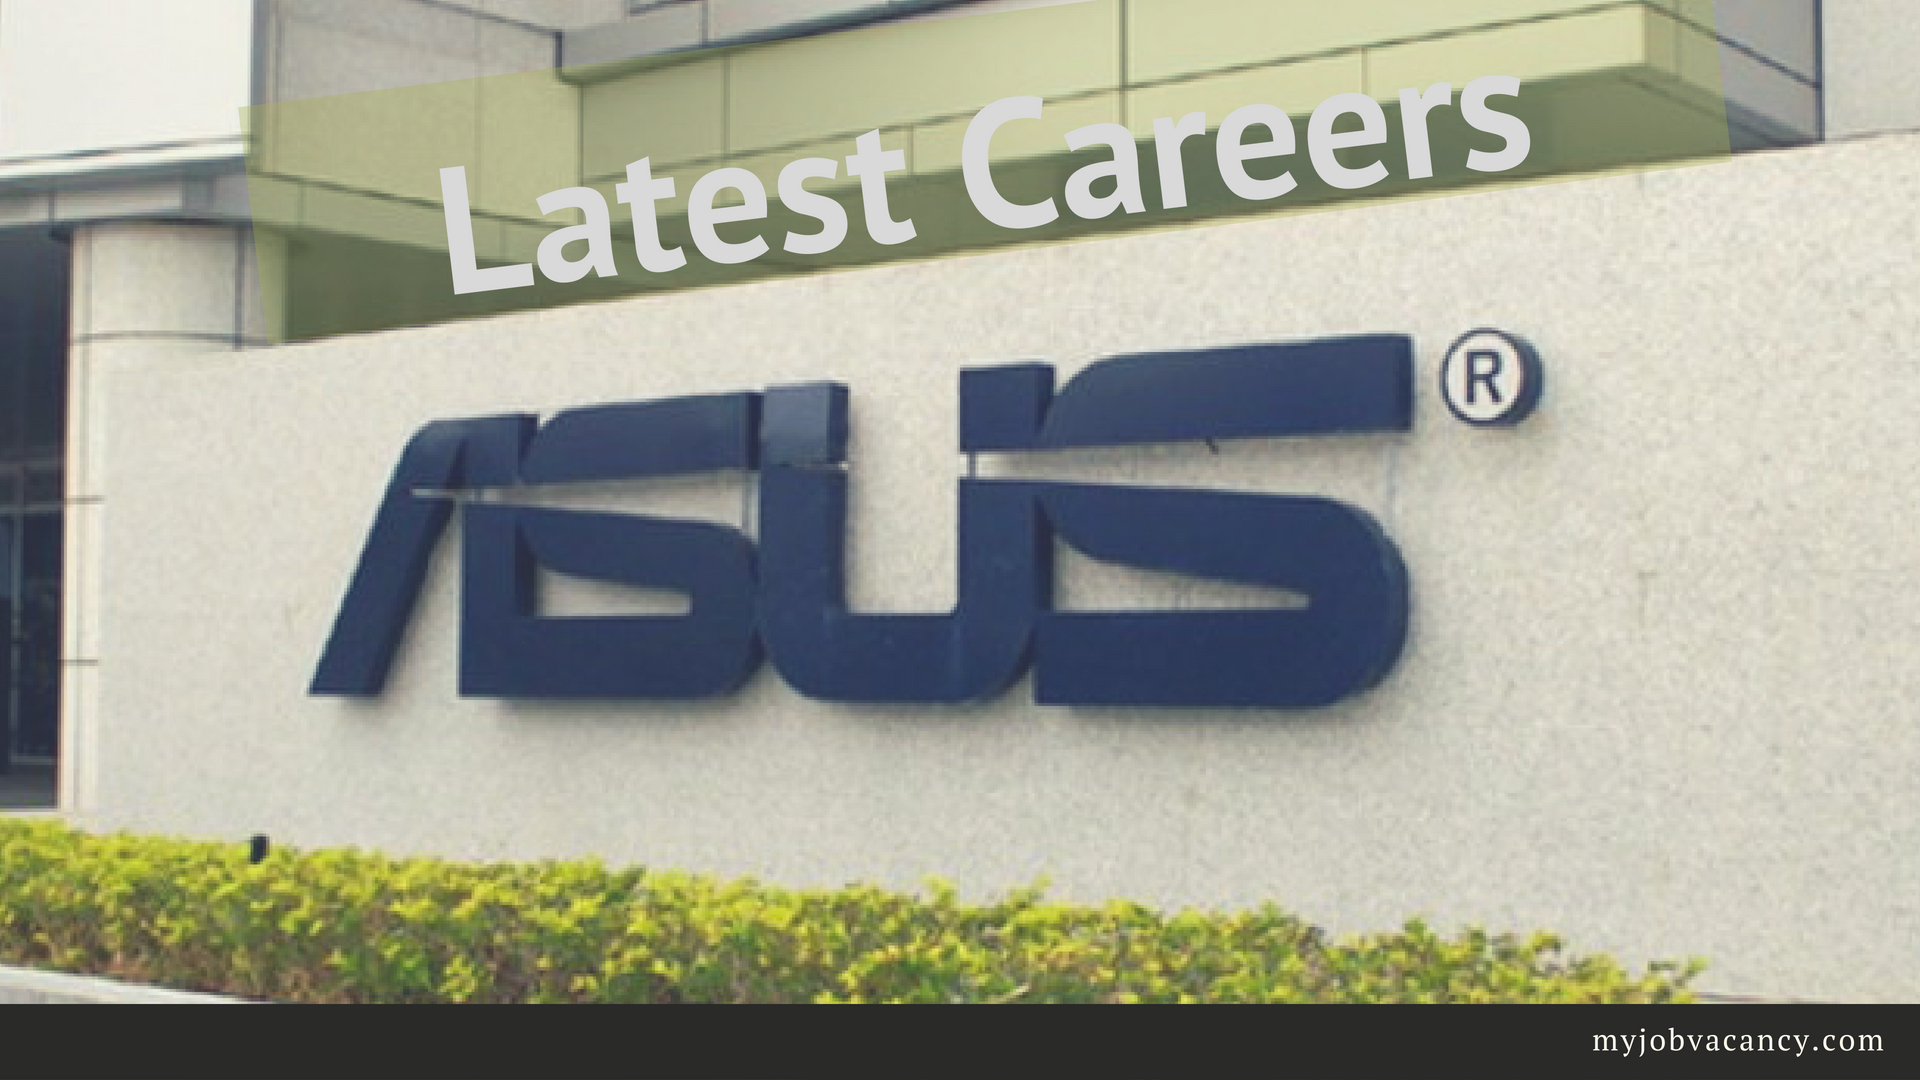 ASUS latest career details